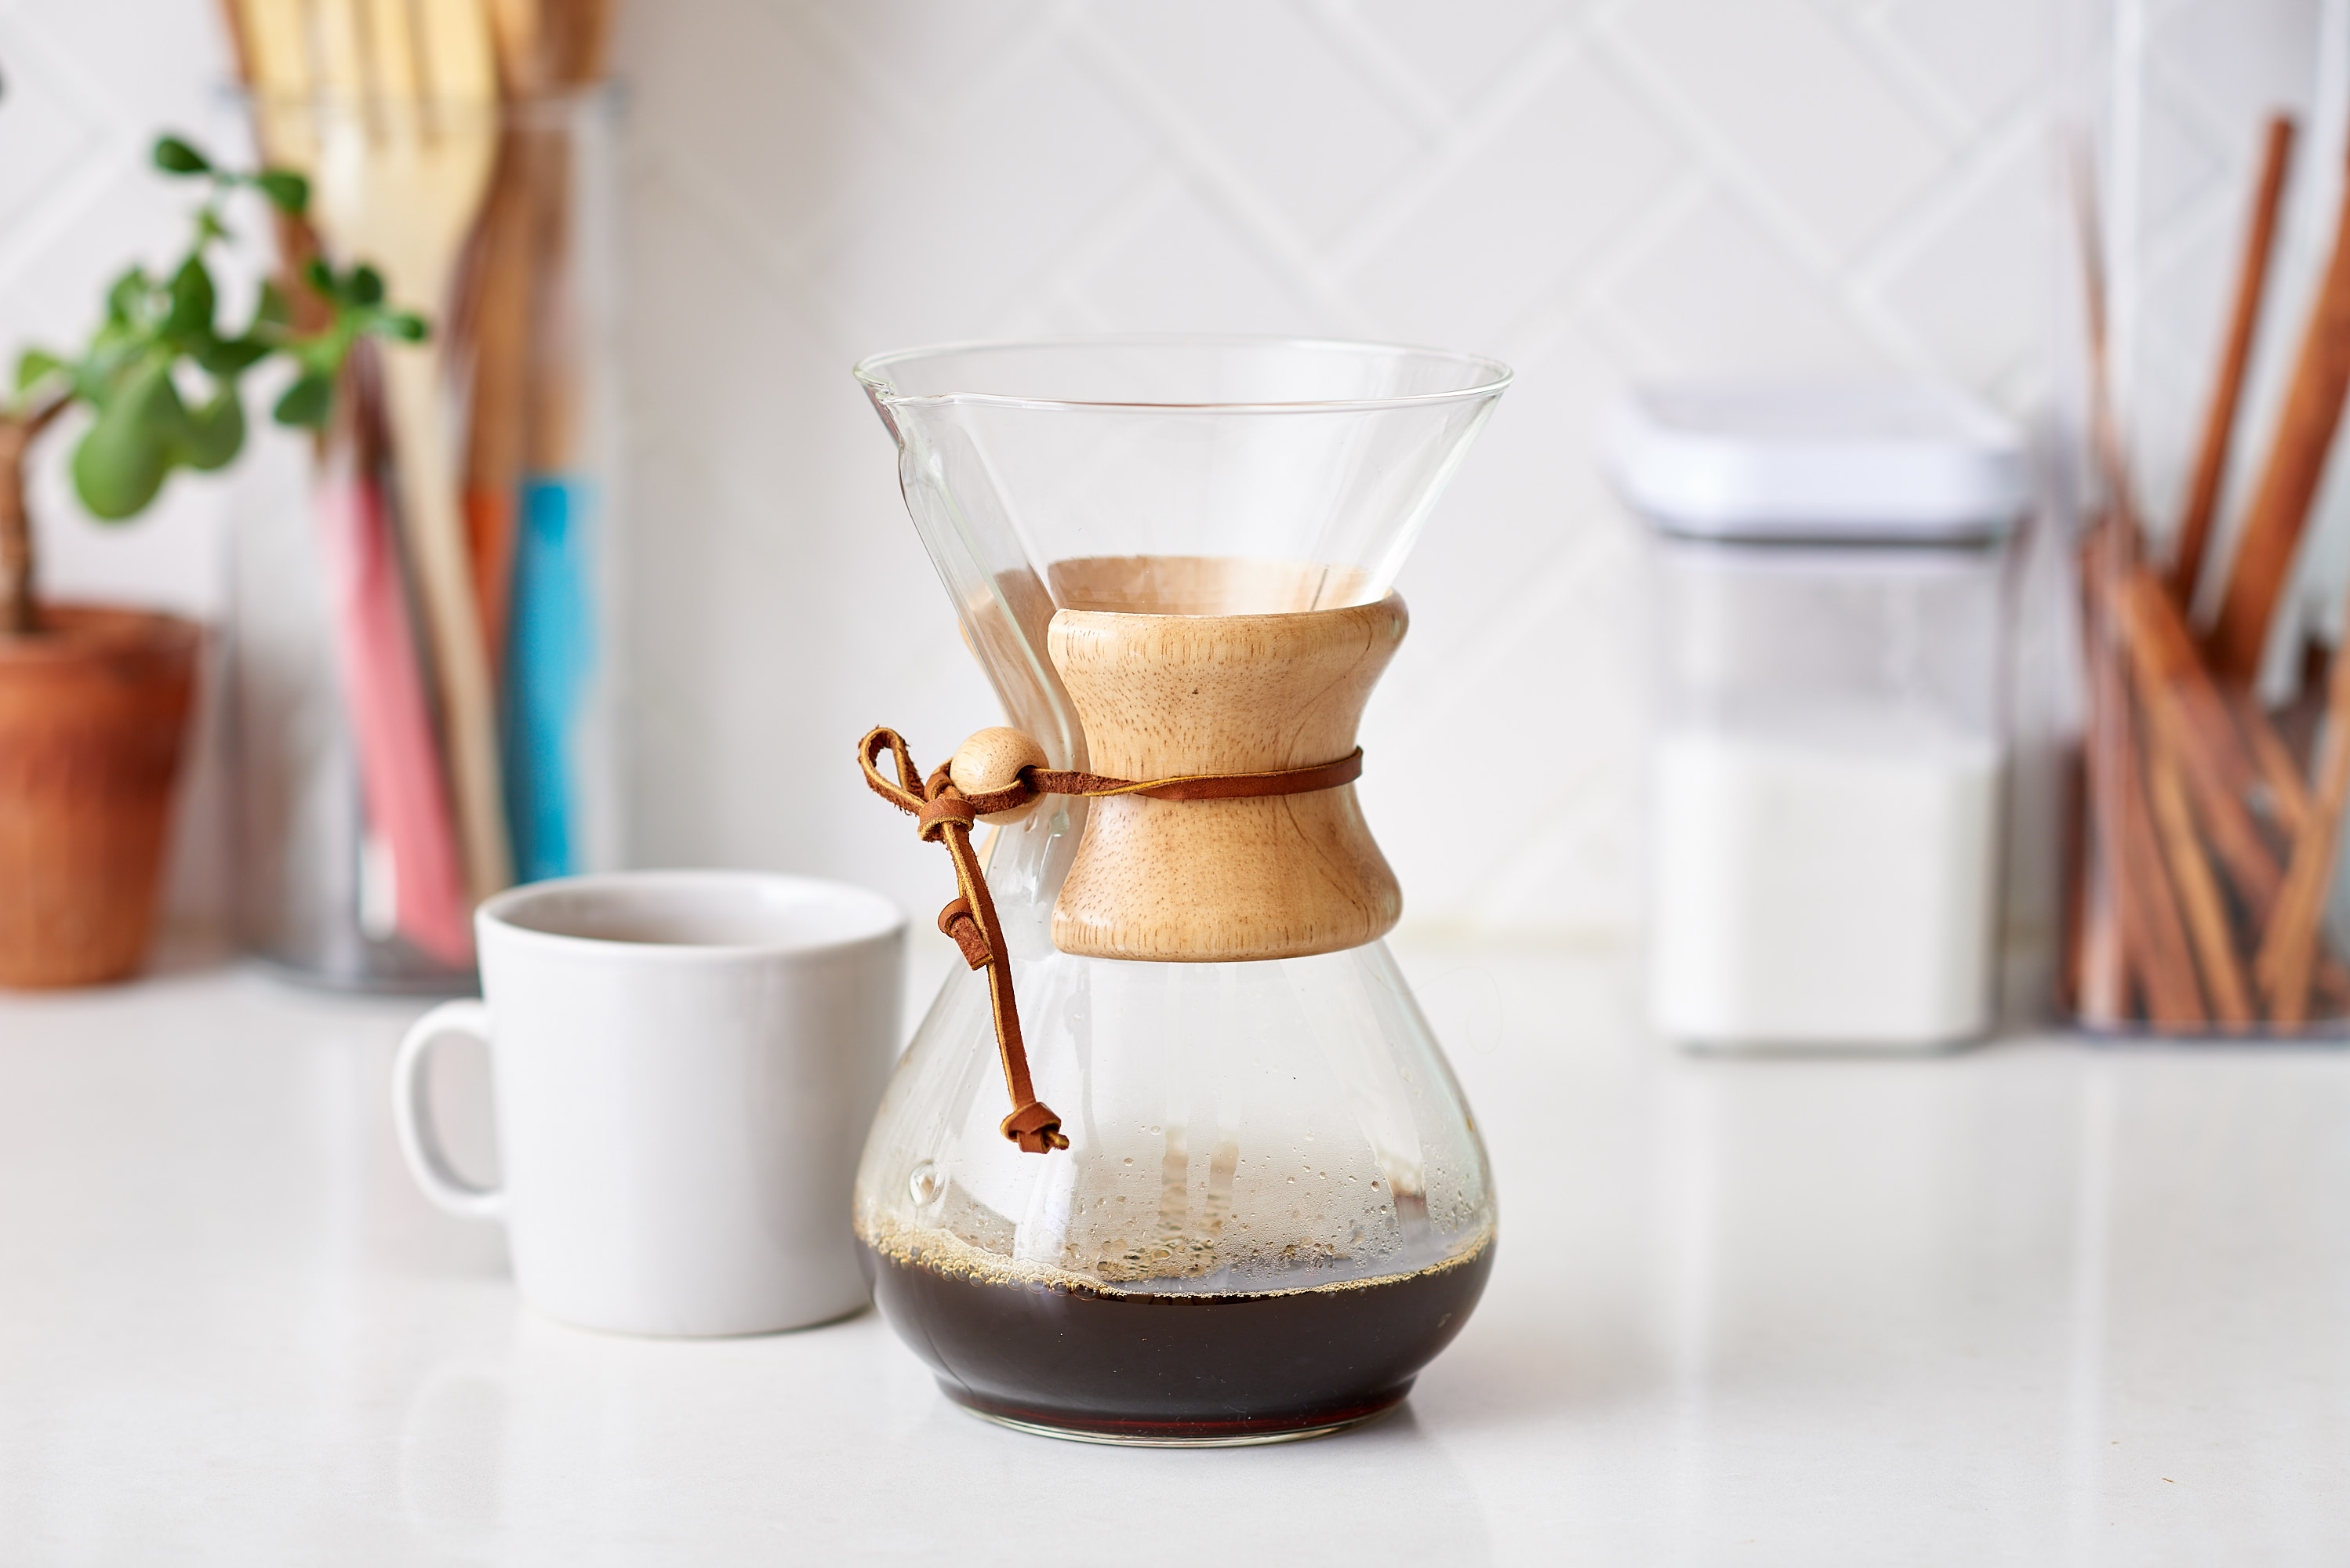  Chemex - Coffeemaker Brush: Home & Kitchen